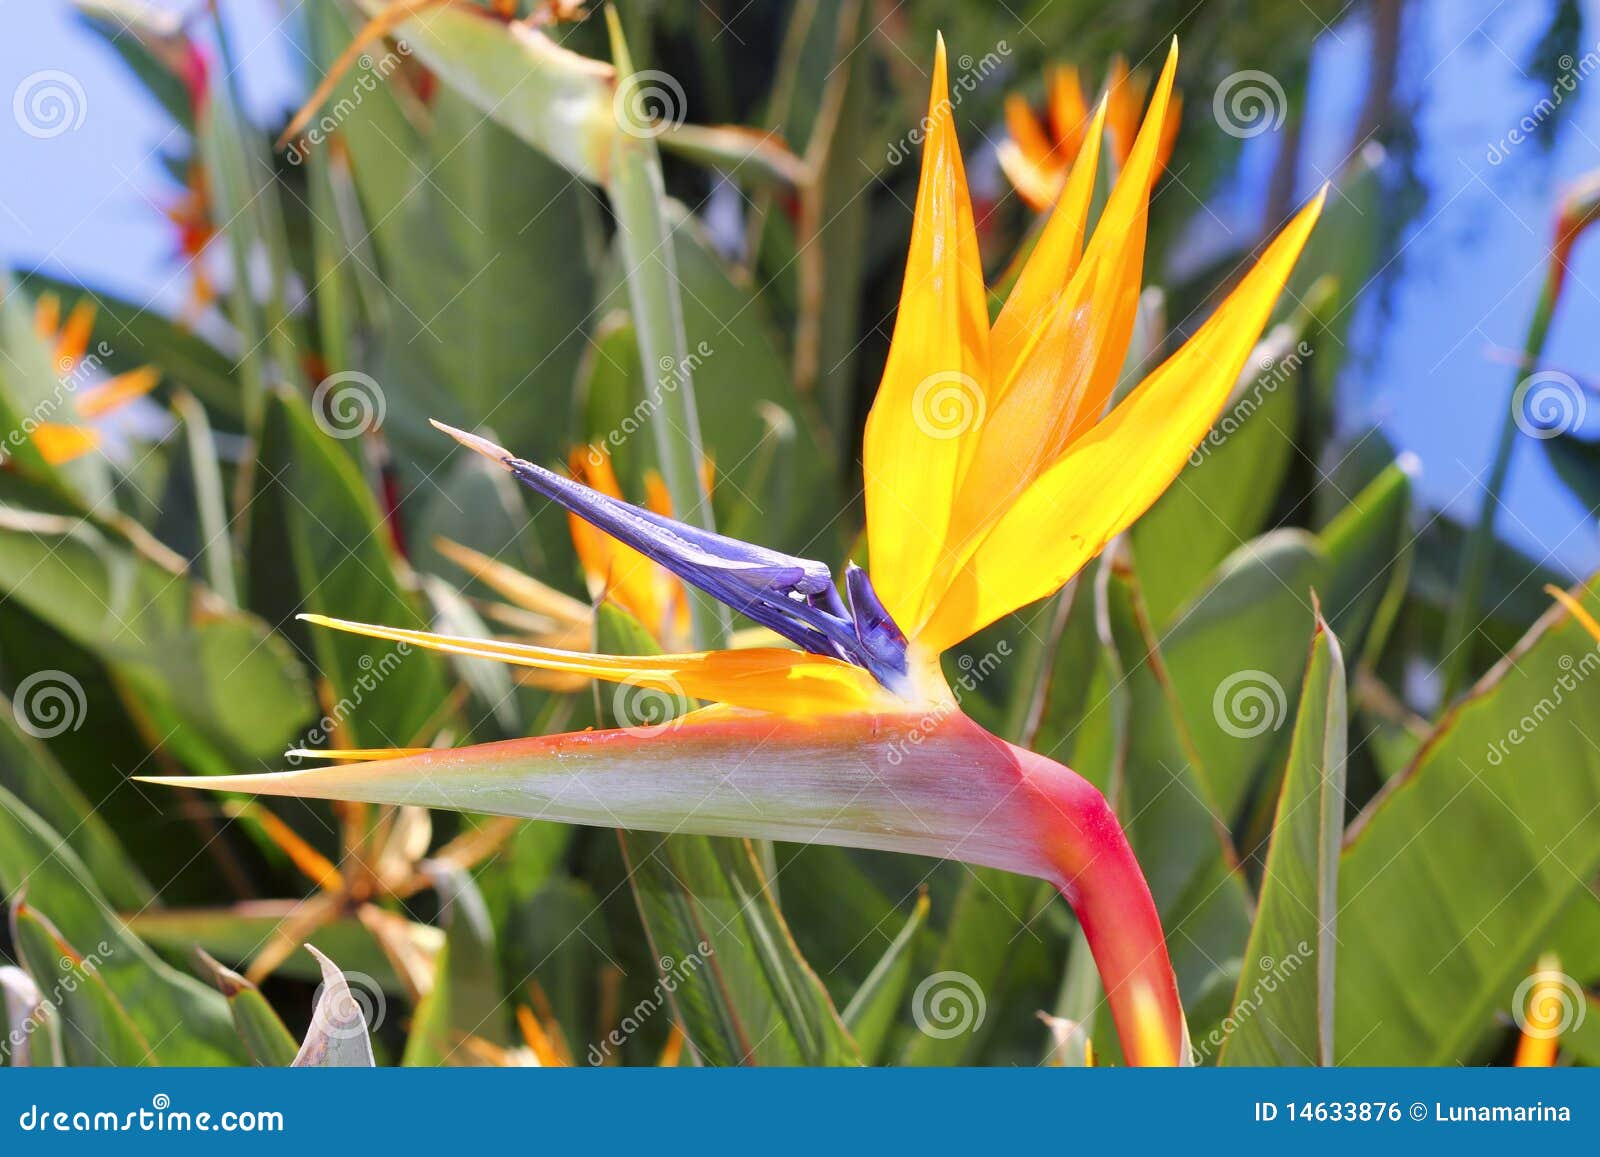 genus strelitzia reginae orange bird flower